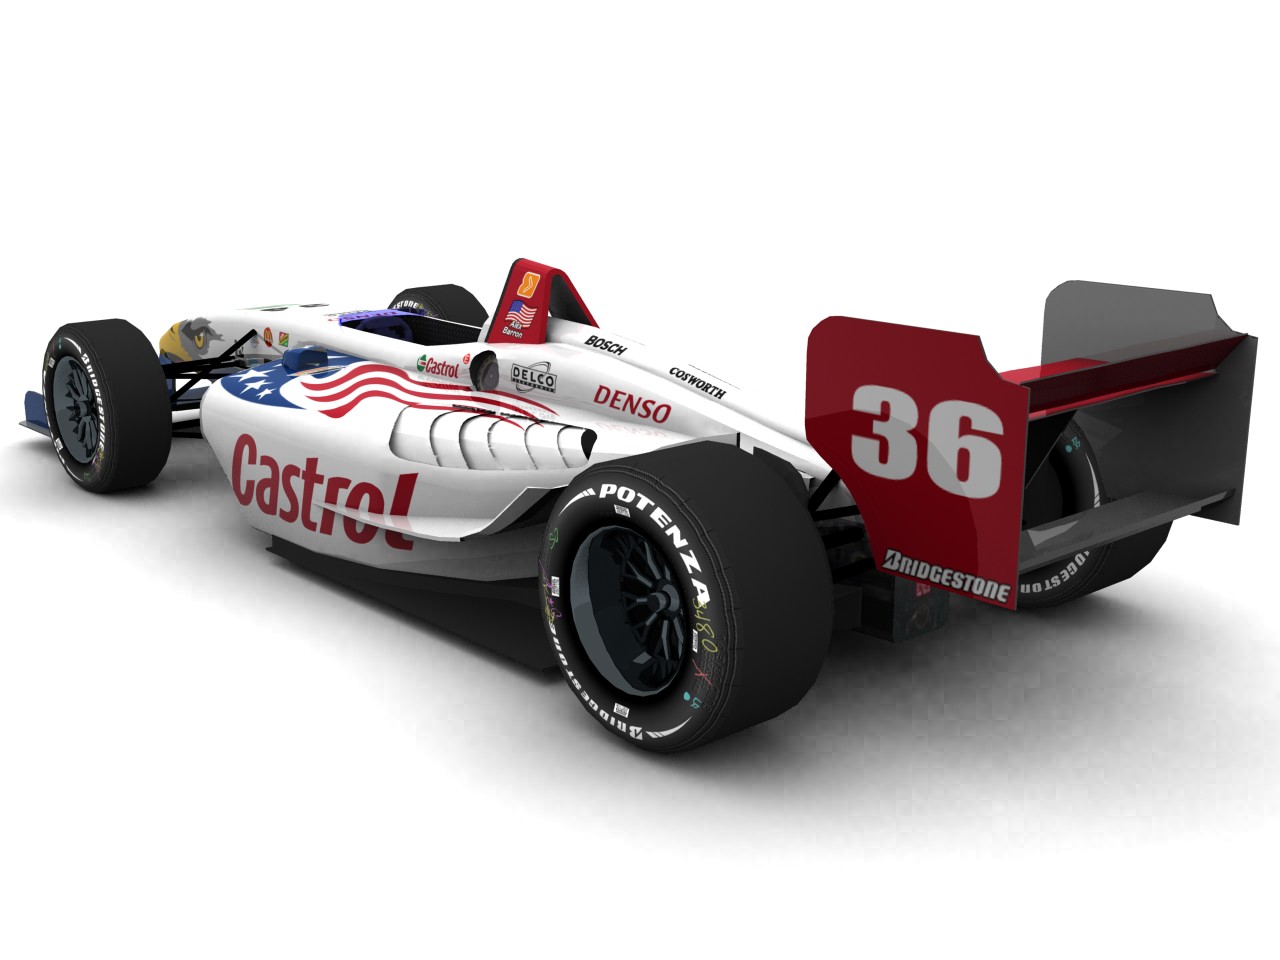 1996 – 1999 All American Racers, #36, Alex Barron, Panoz Elan DP01, Cosworth XFE, Bridgestone Potenza, Castrol (Blau/rotes USA Livery) (Blick von hinten, links)